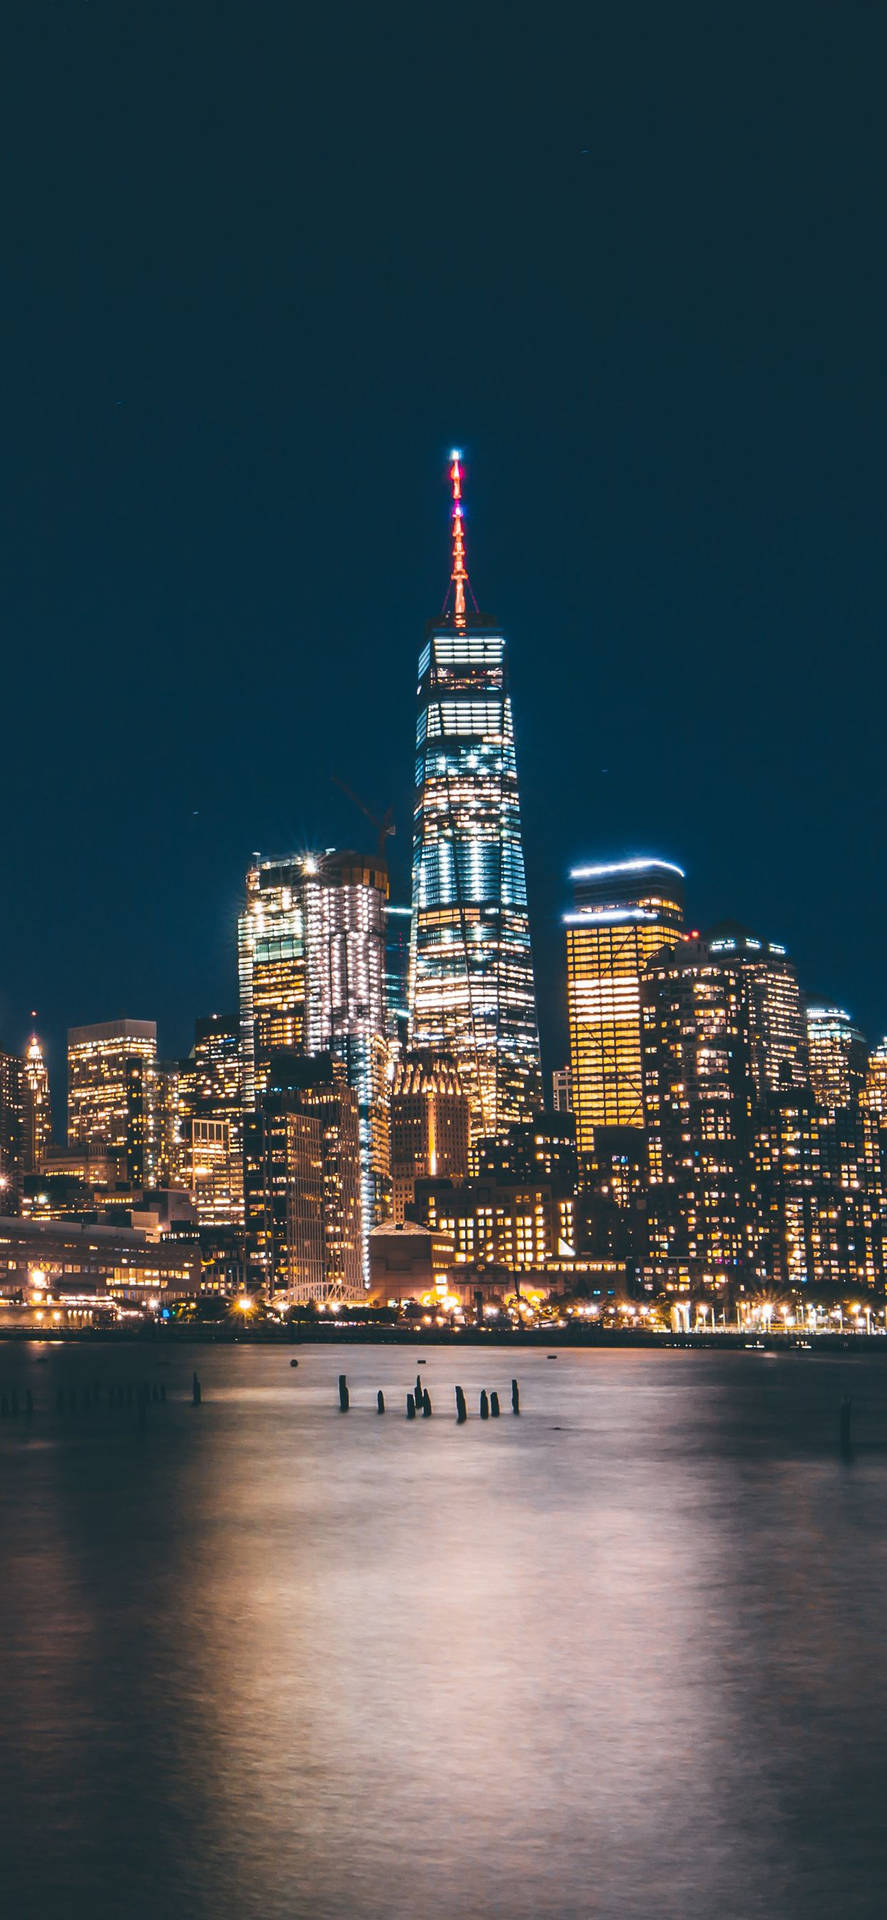 Free New York Skyline Iphone Wallpaper Downloads, [100+] New York Skyline  Iphone Wallpapers for FREE 